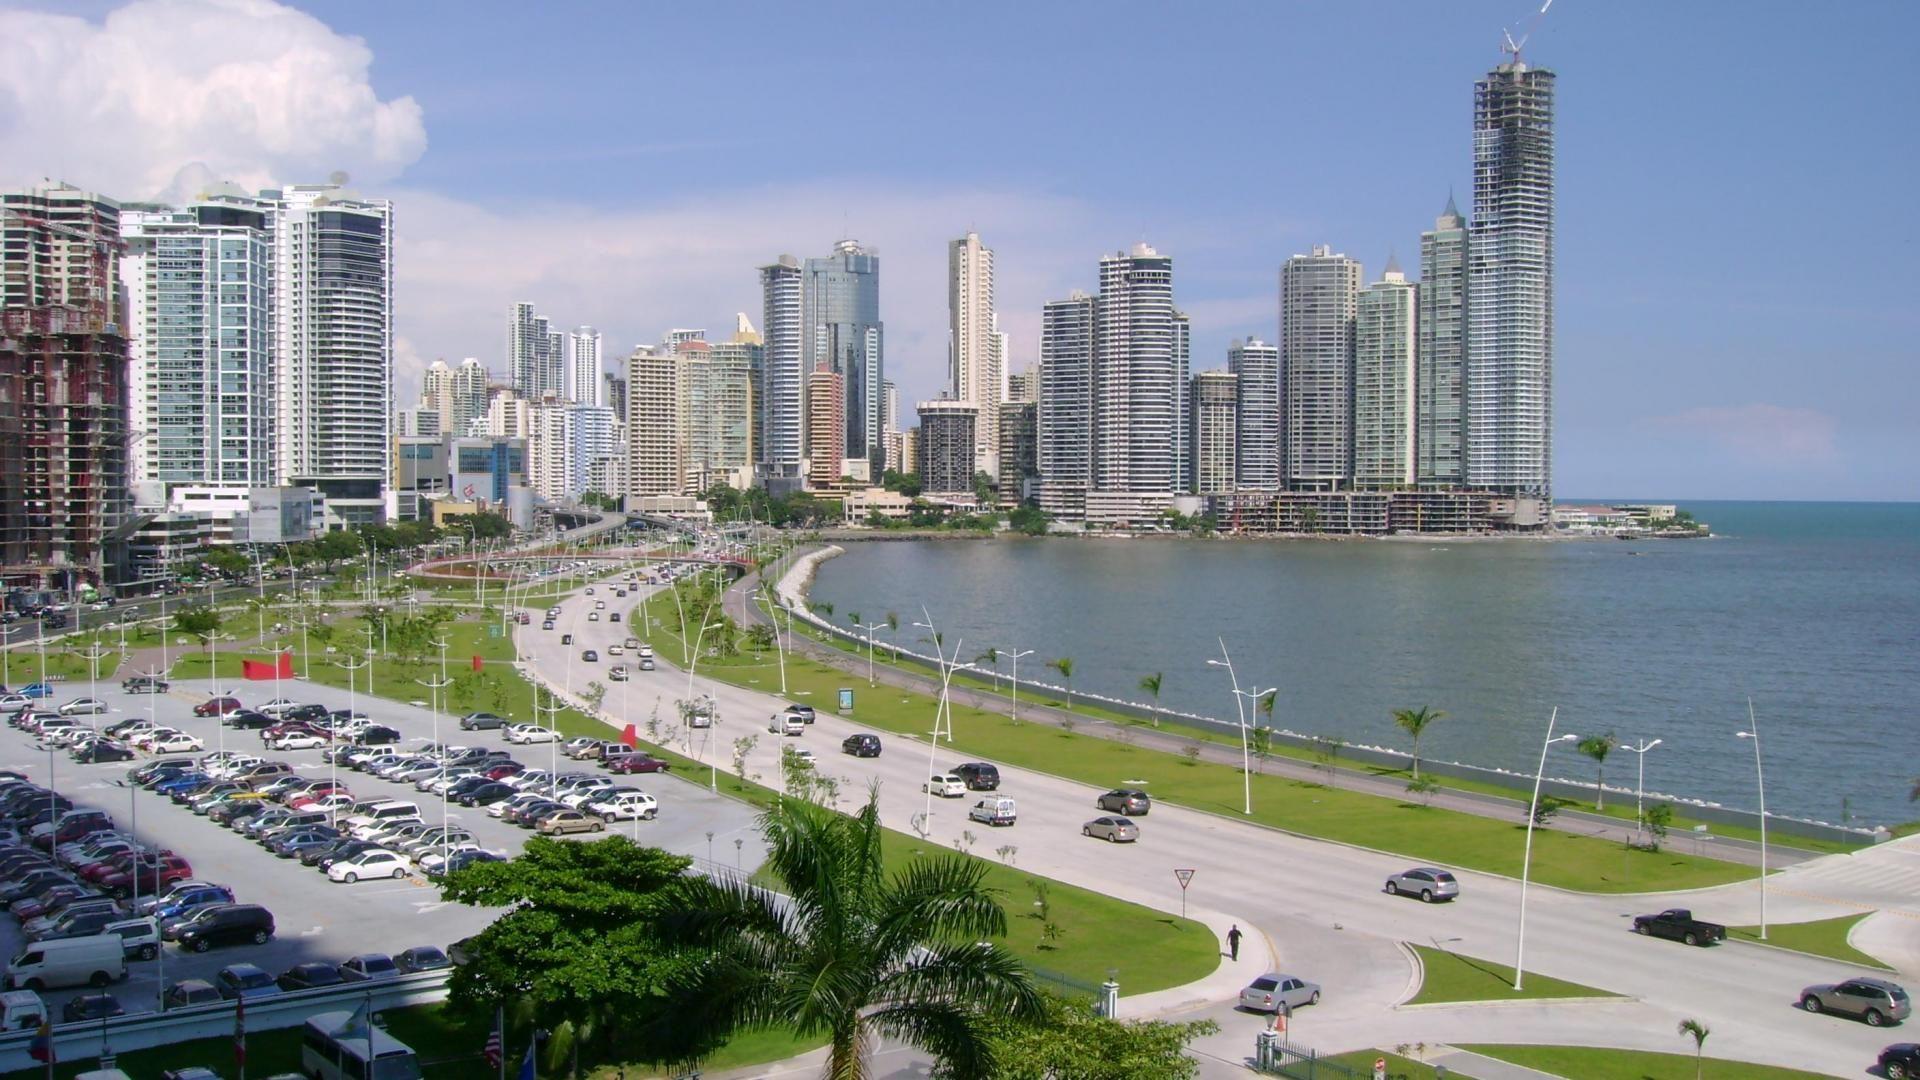 Panama City Beach Image High Quality 7 #beachpicturehighquality